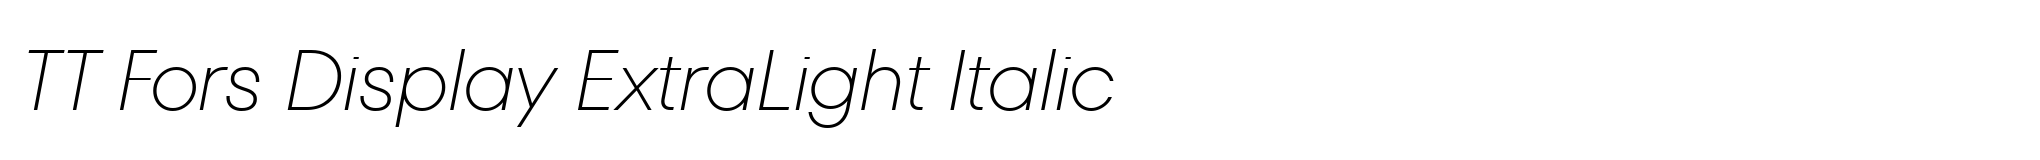 TT Fors Display ExtraLight Italic image